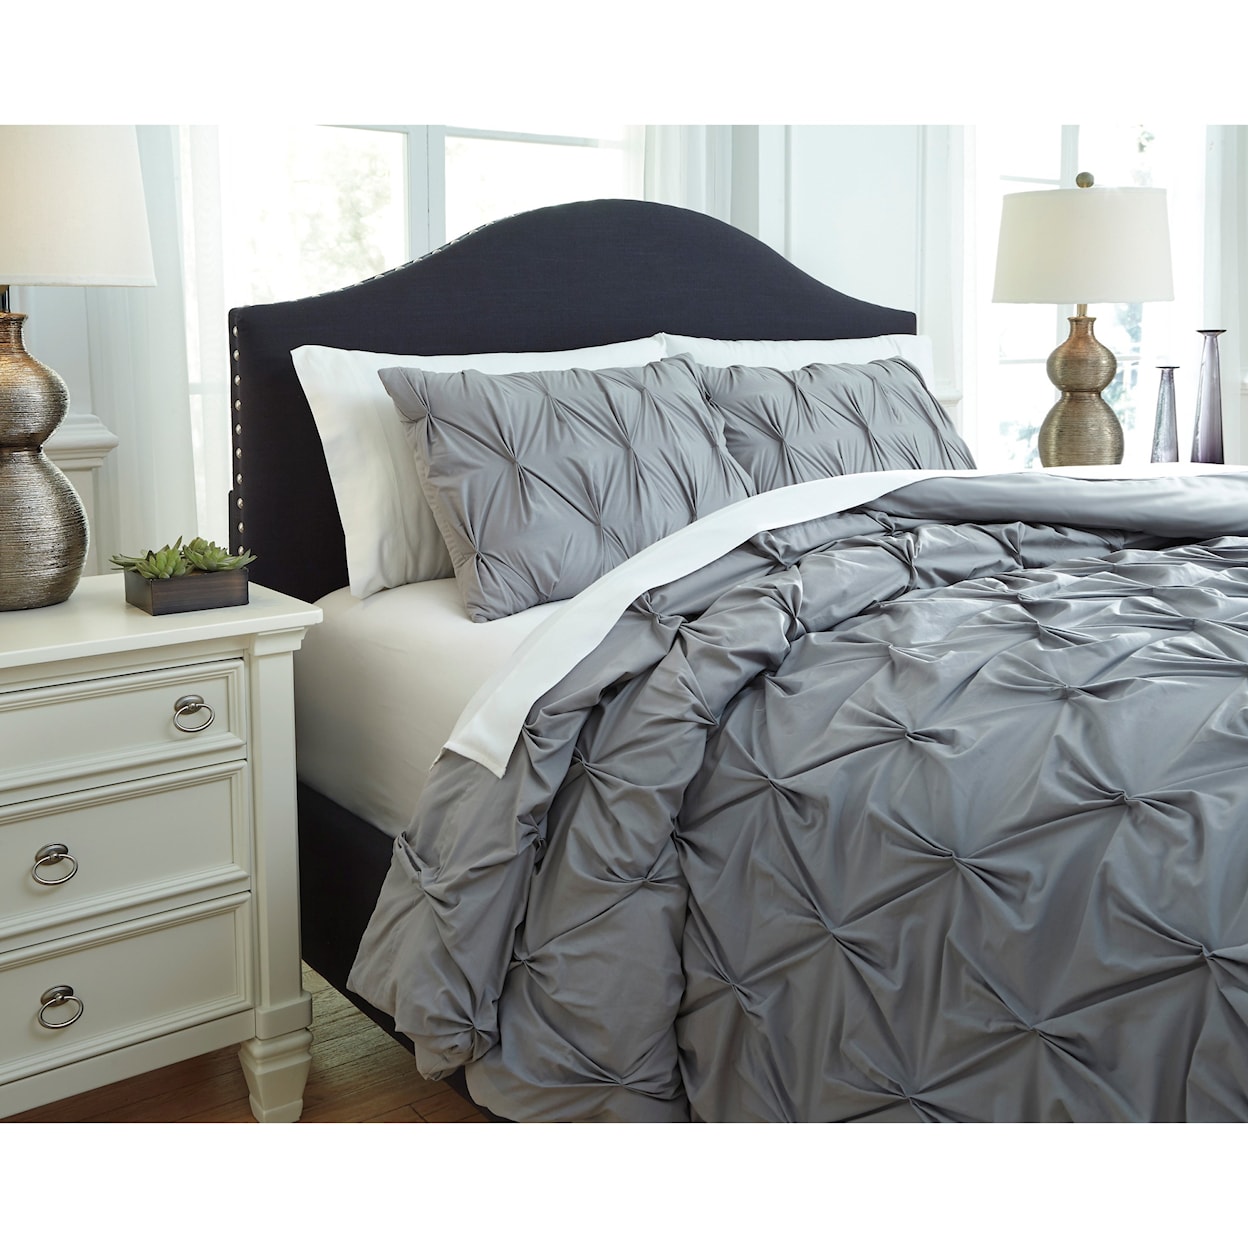 Ashley Signature Design Bedding Sets Queen Rimy Gray Comforter Set